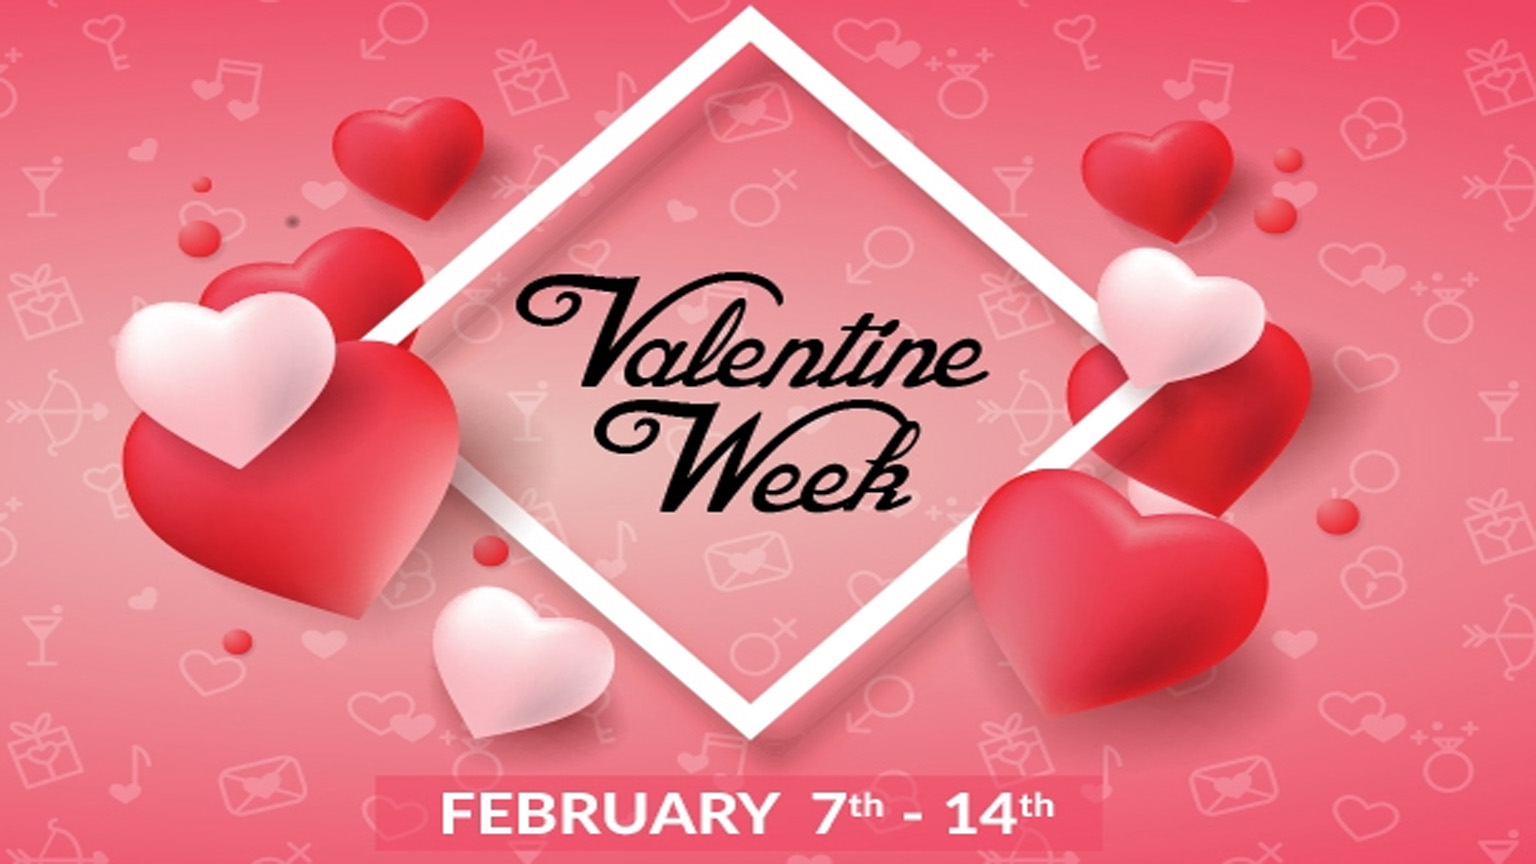 The Seven Days of Valentine Week!